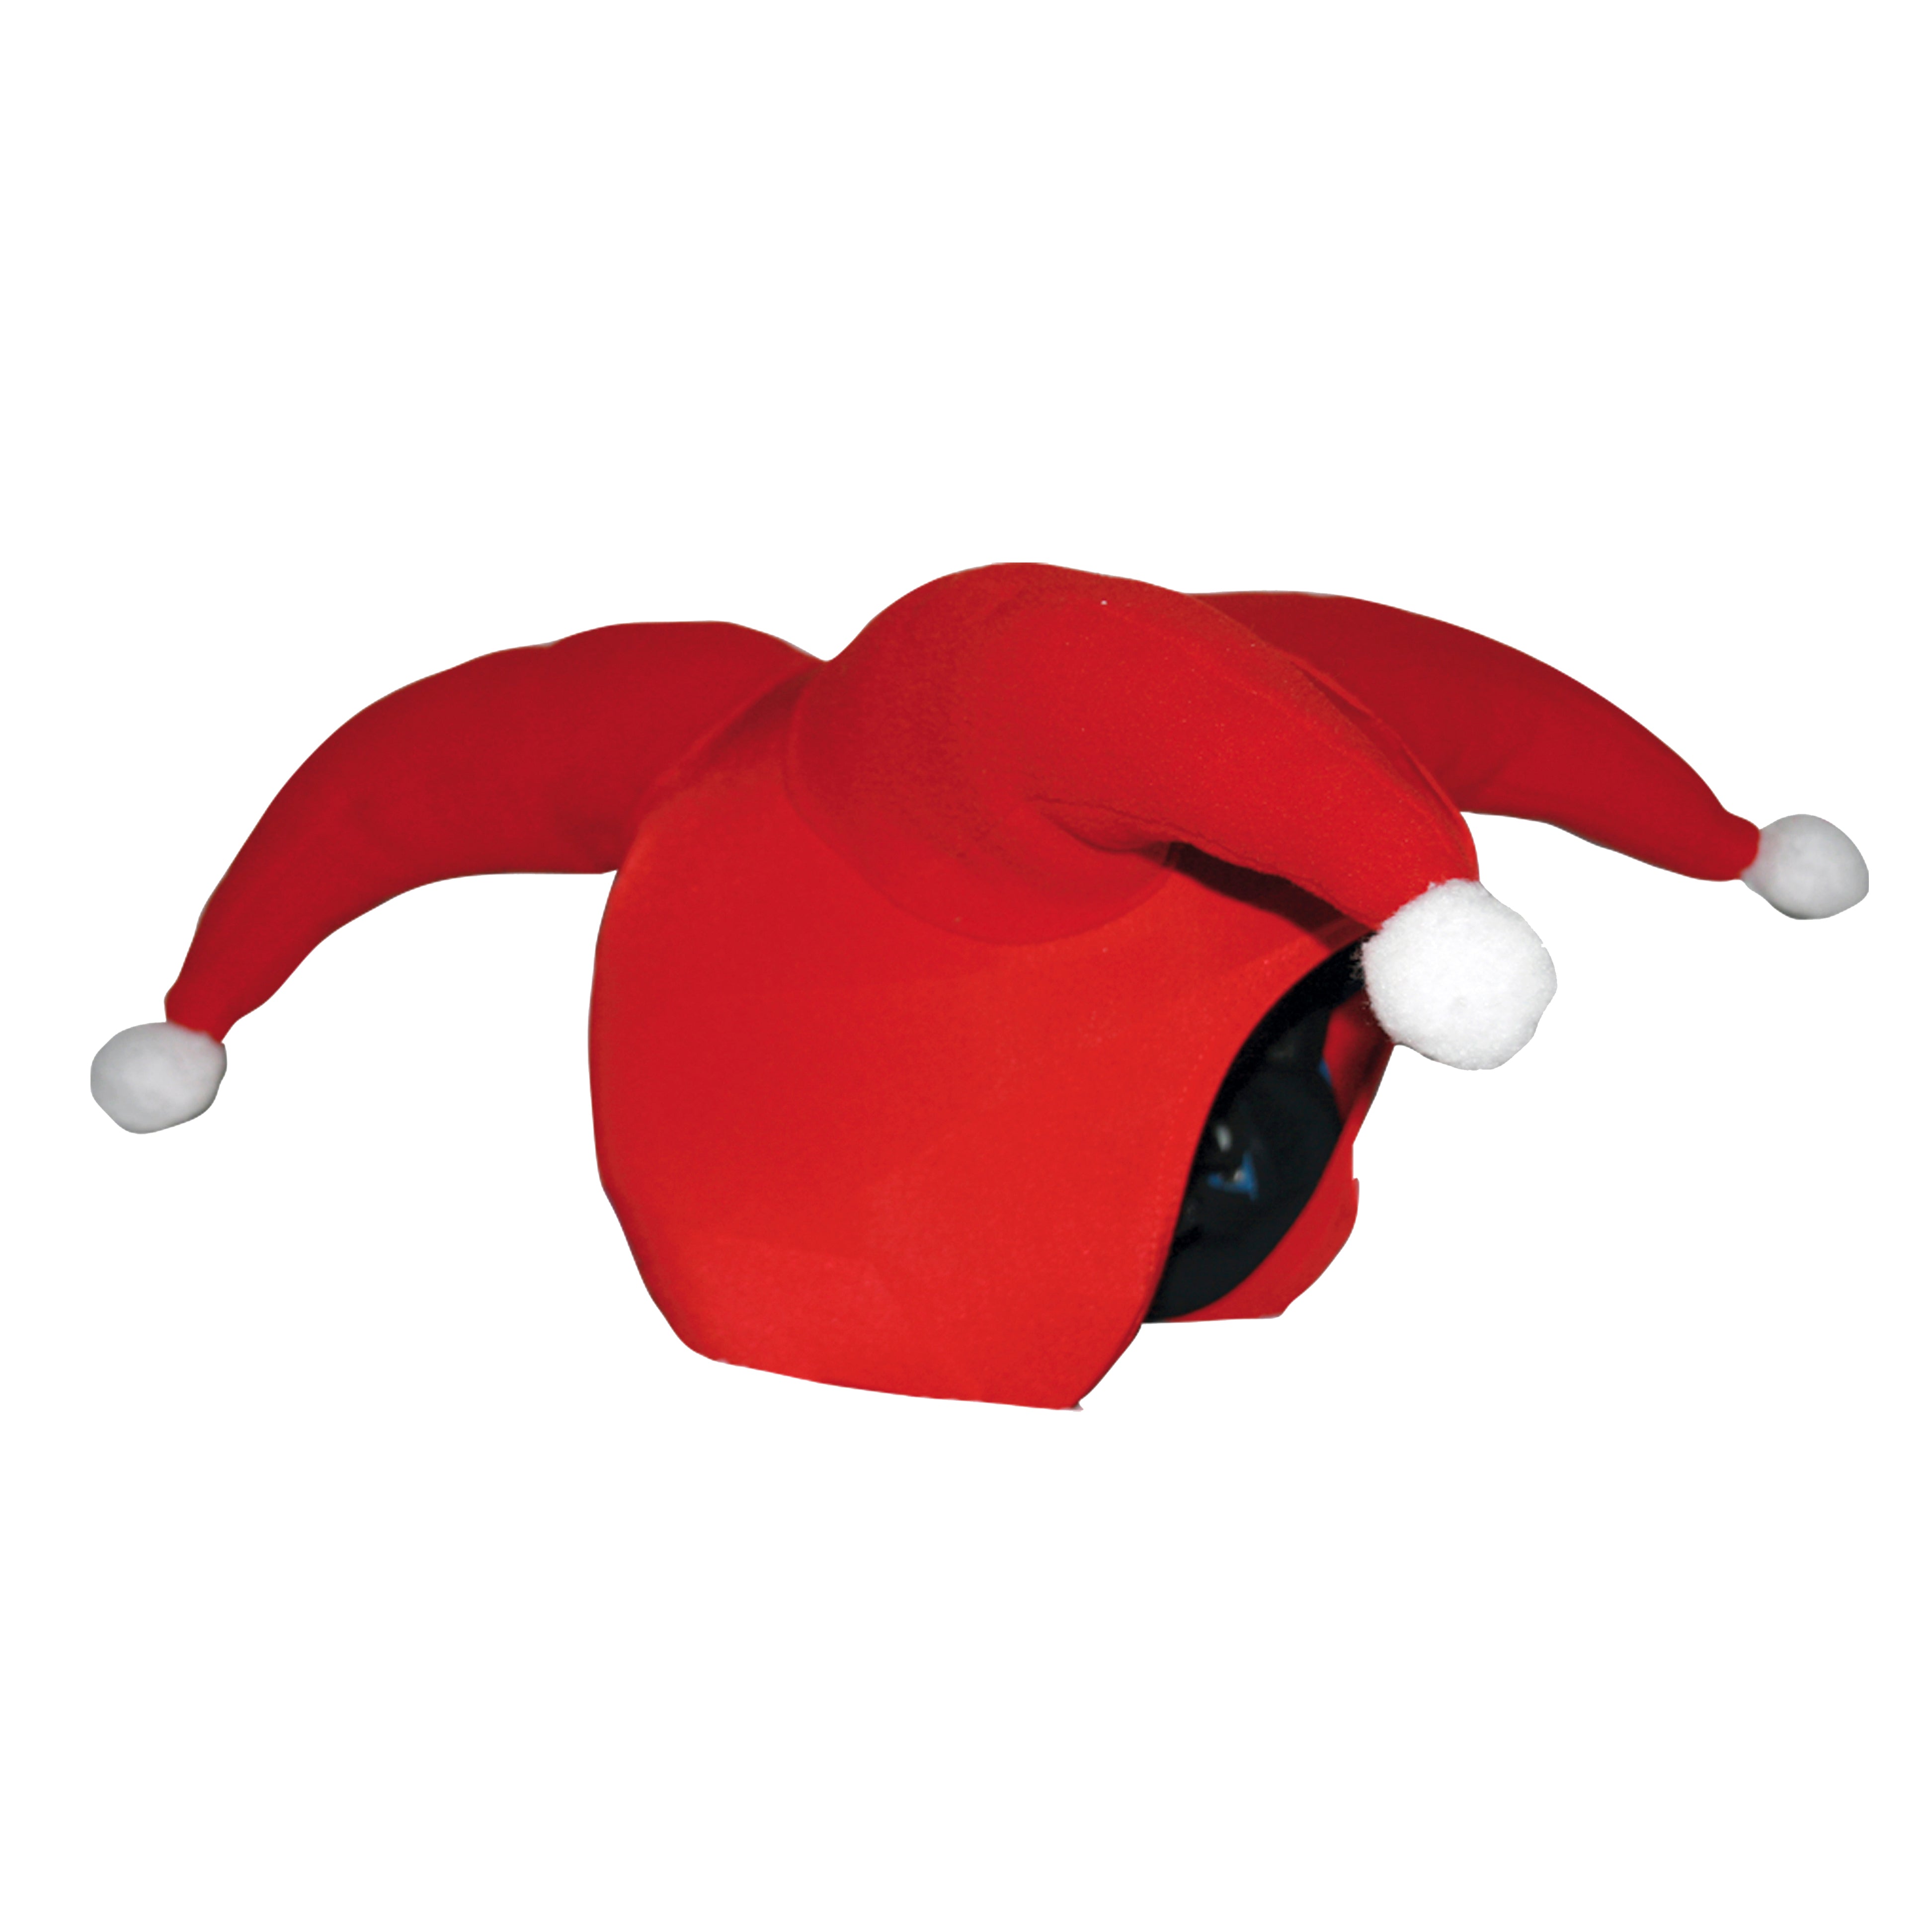 Coolcasc Santa Claus Helmet Cover